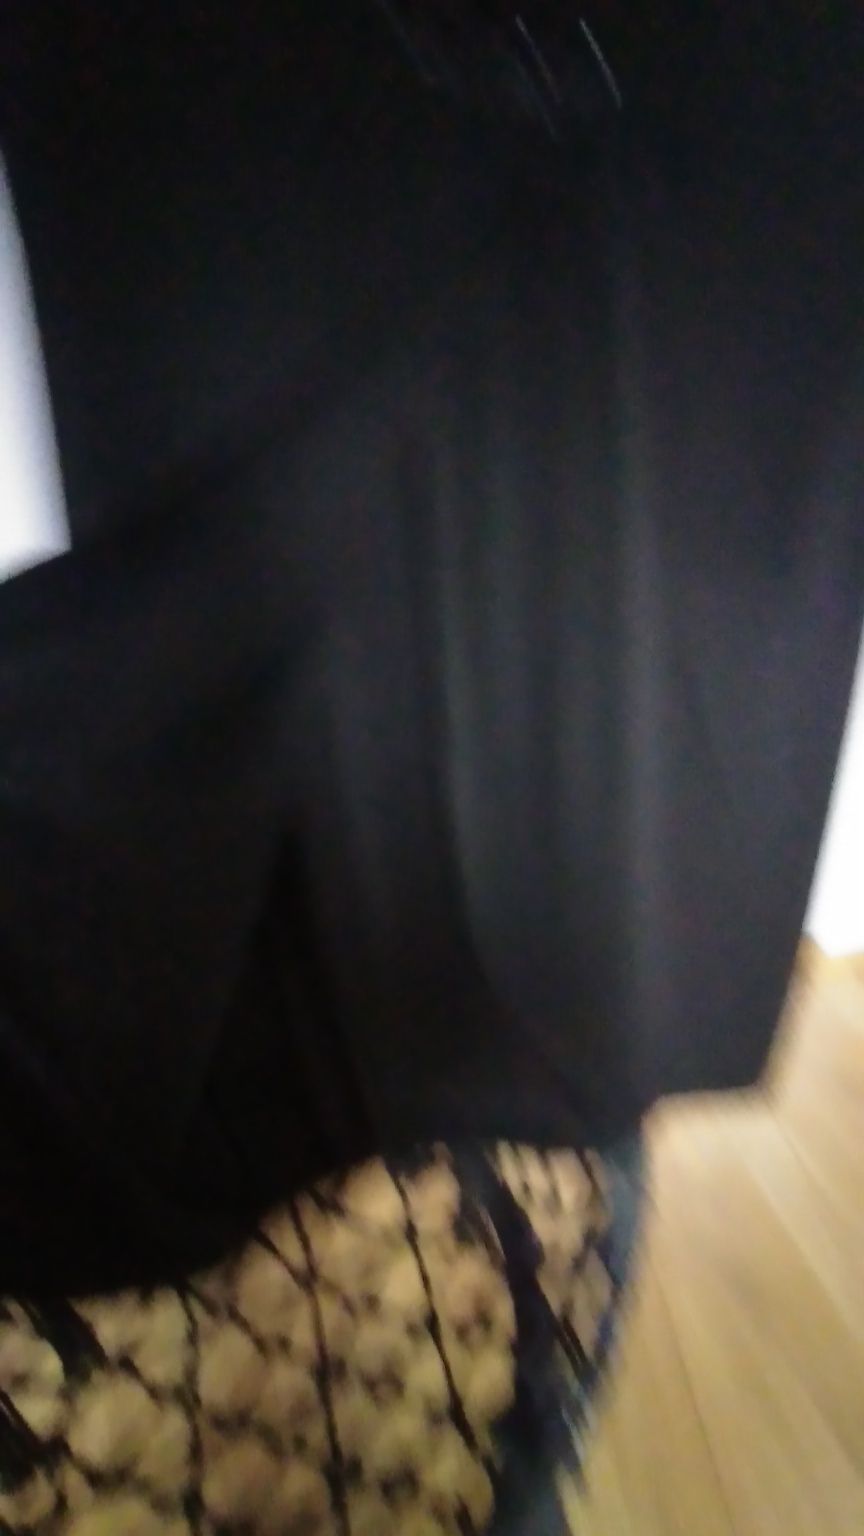 Czarna sukienka fransa L